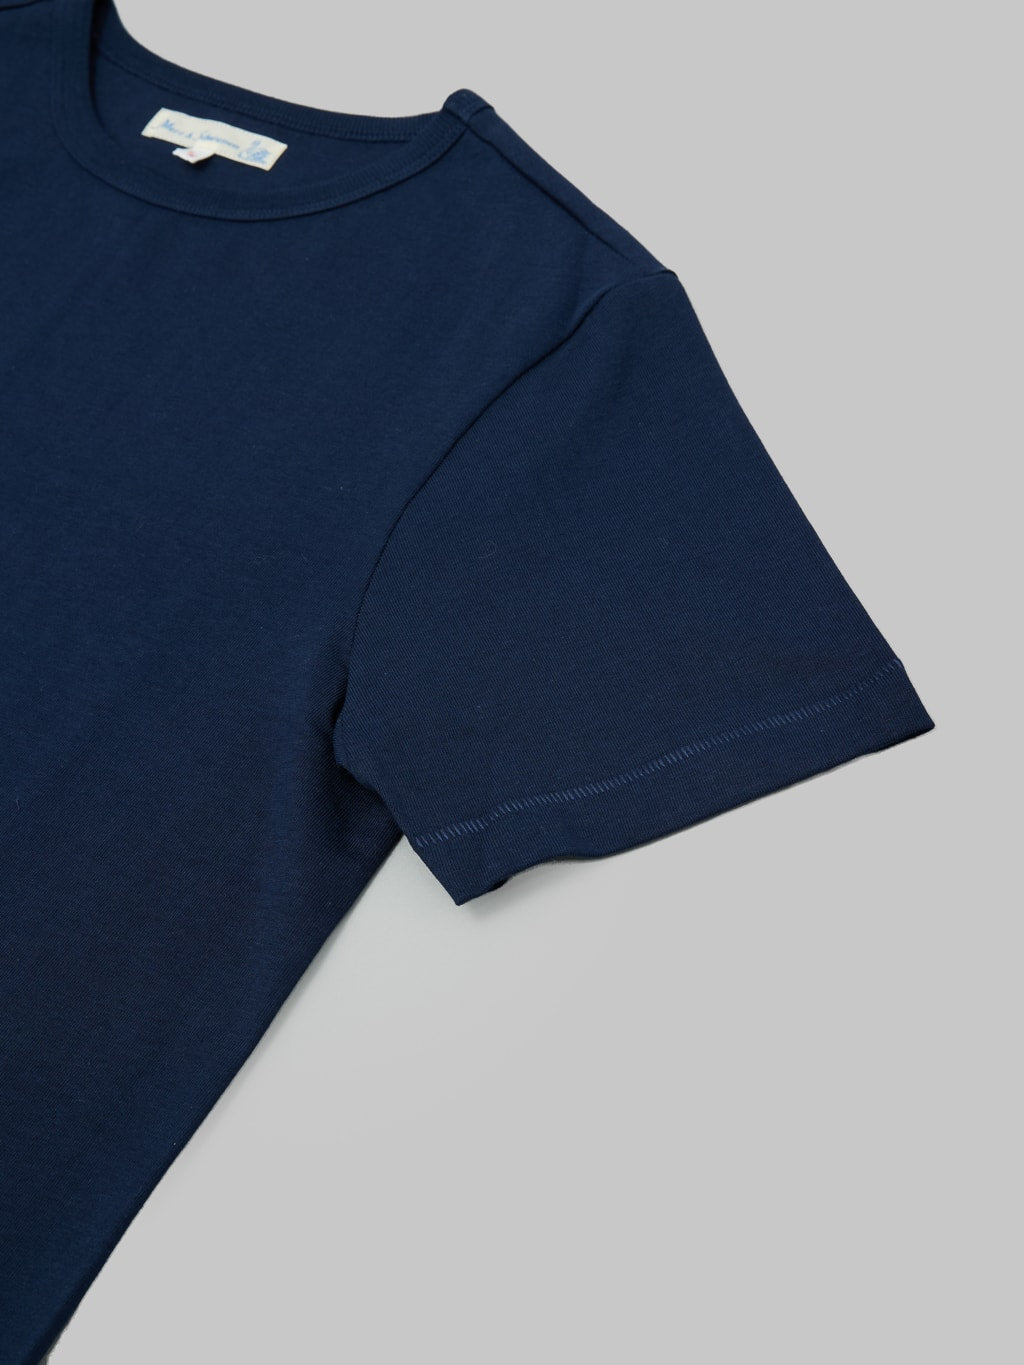 merz b schwanen good originals loopwheeled Tshirt classic fit blue sleeve